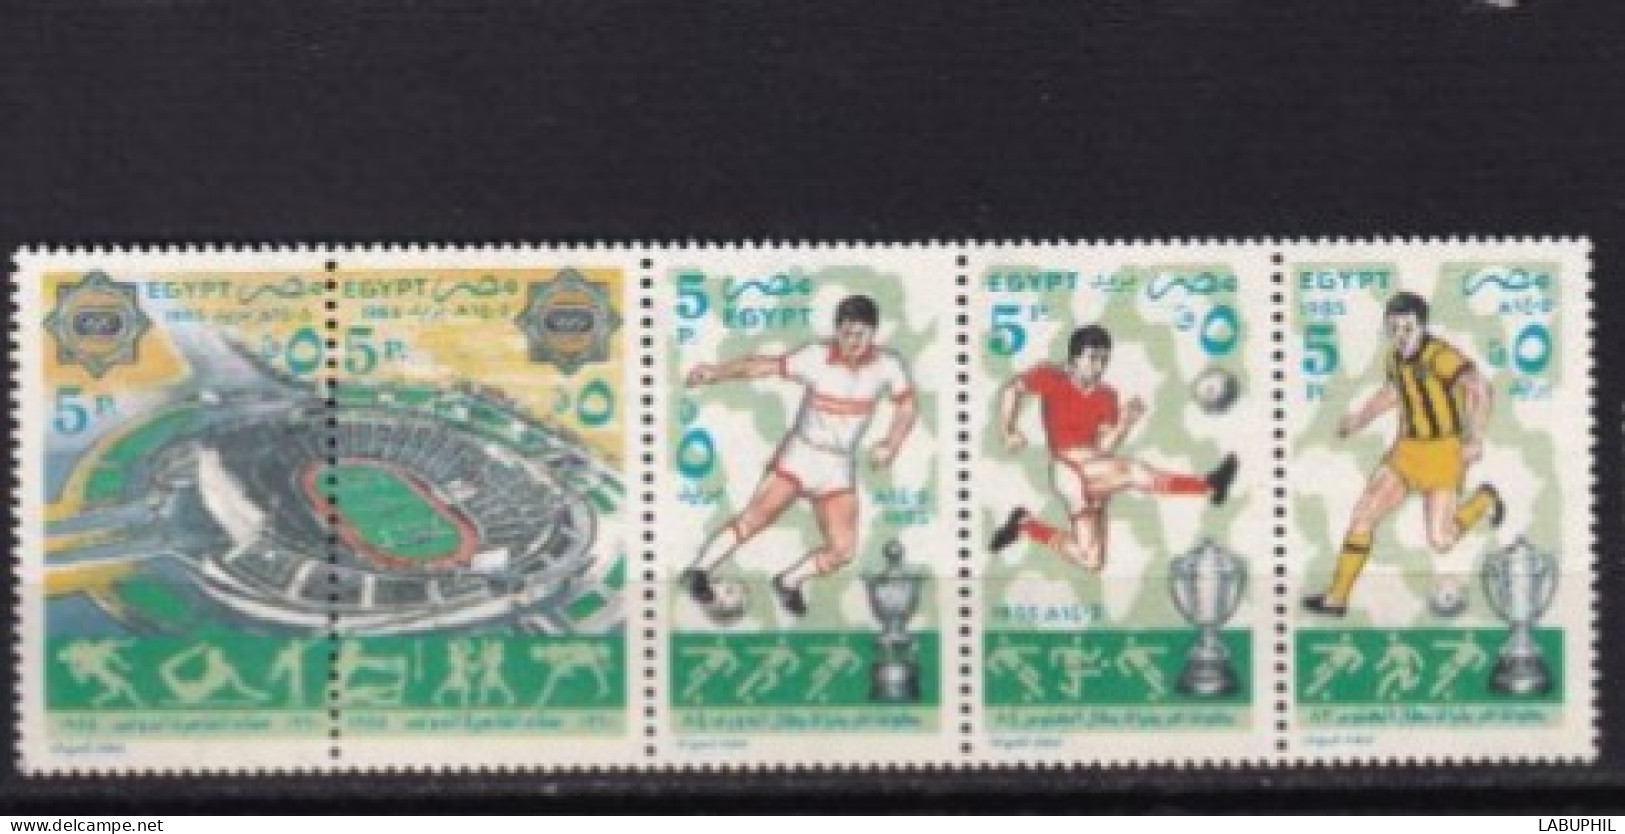 EGYPTE MNH ** 1985 Sport Foot - Ungebraucht